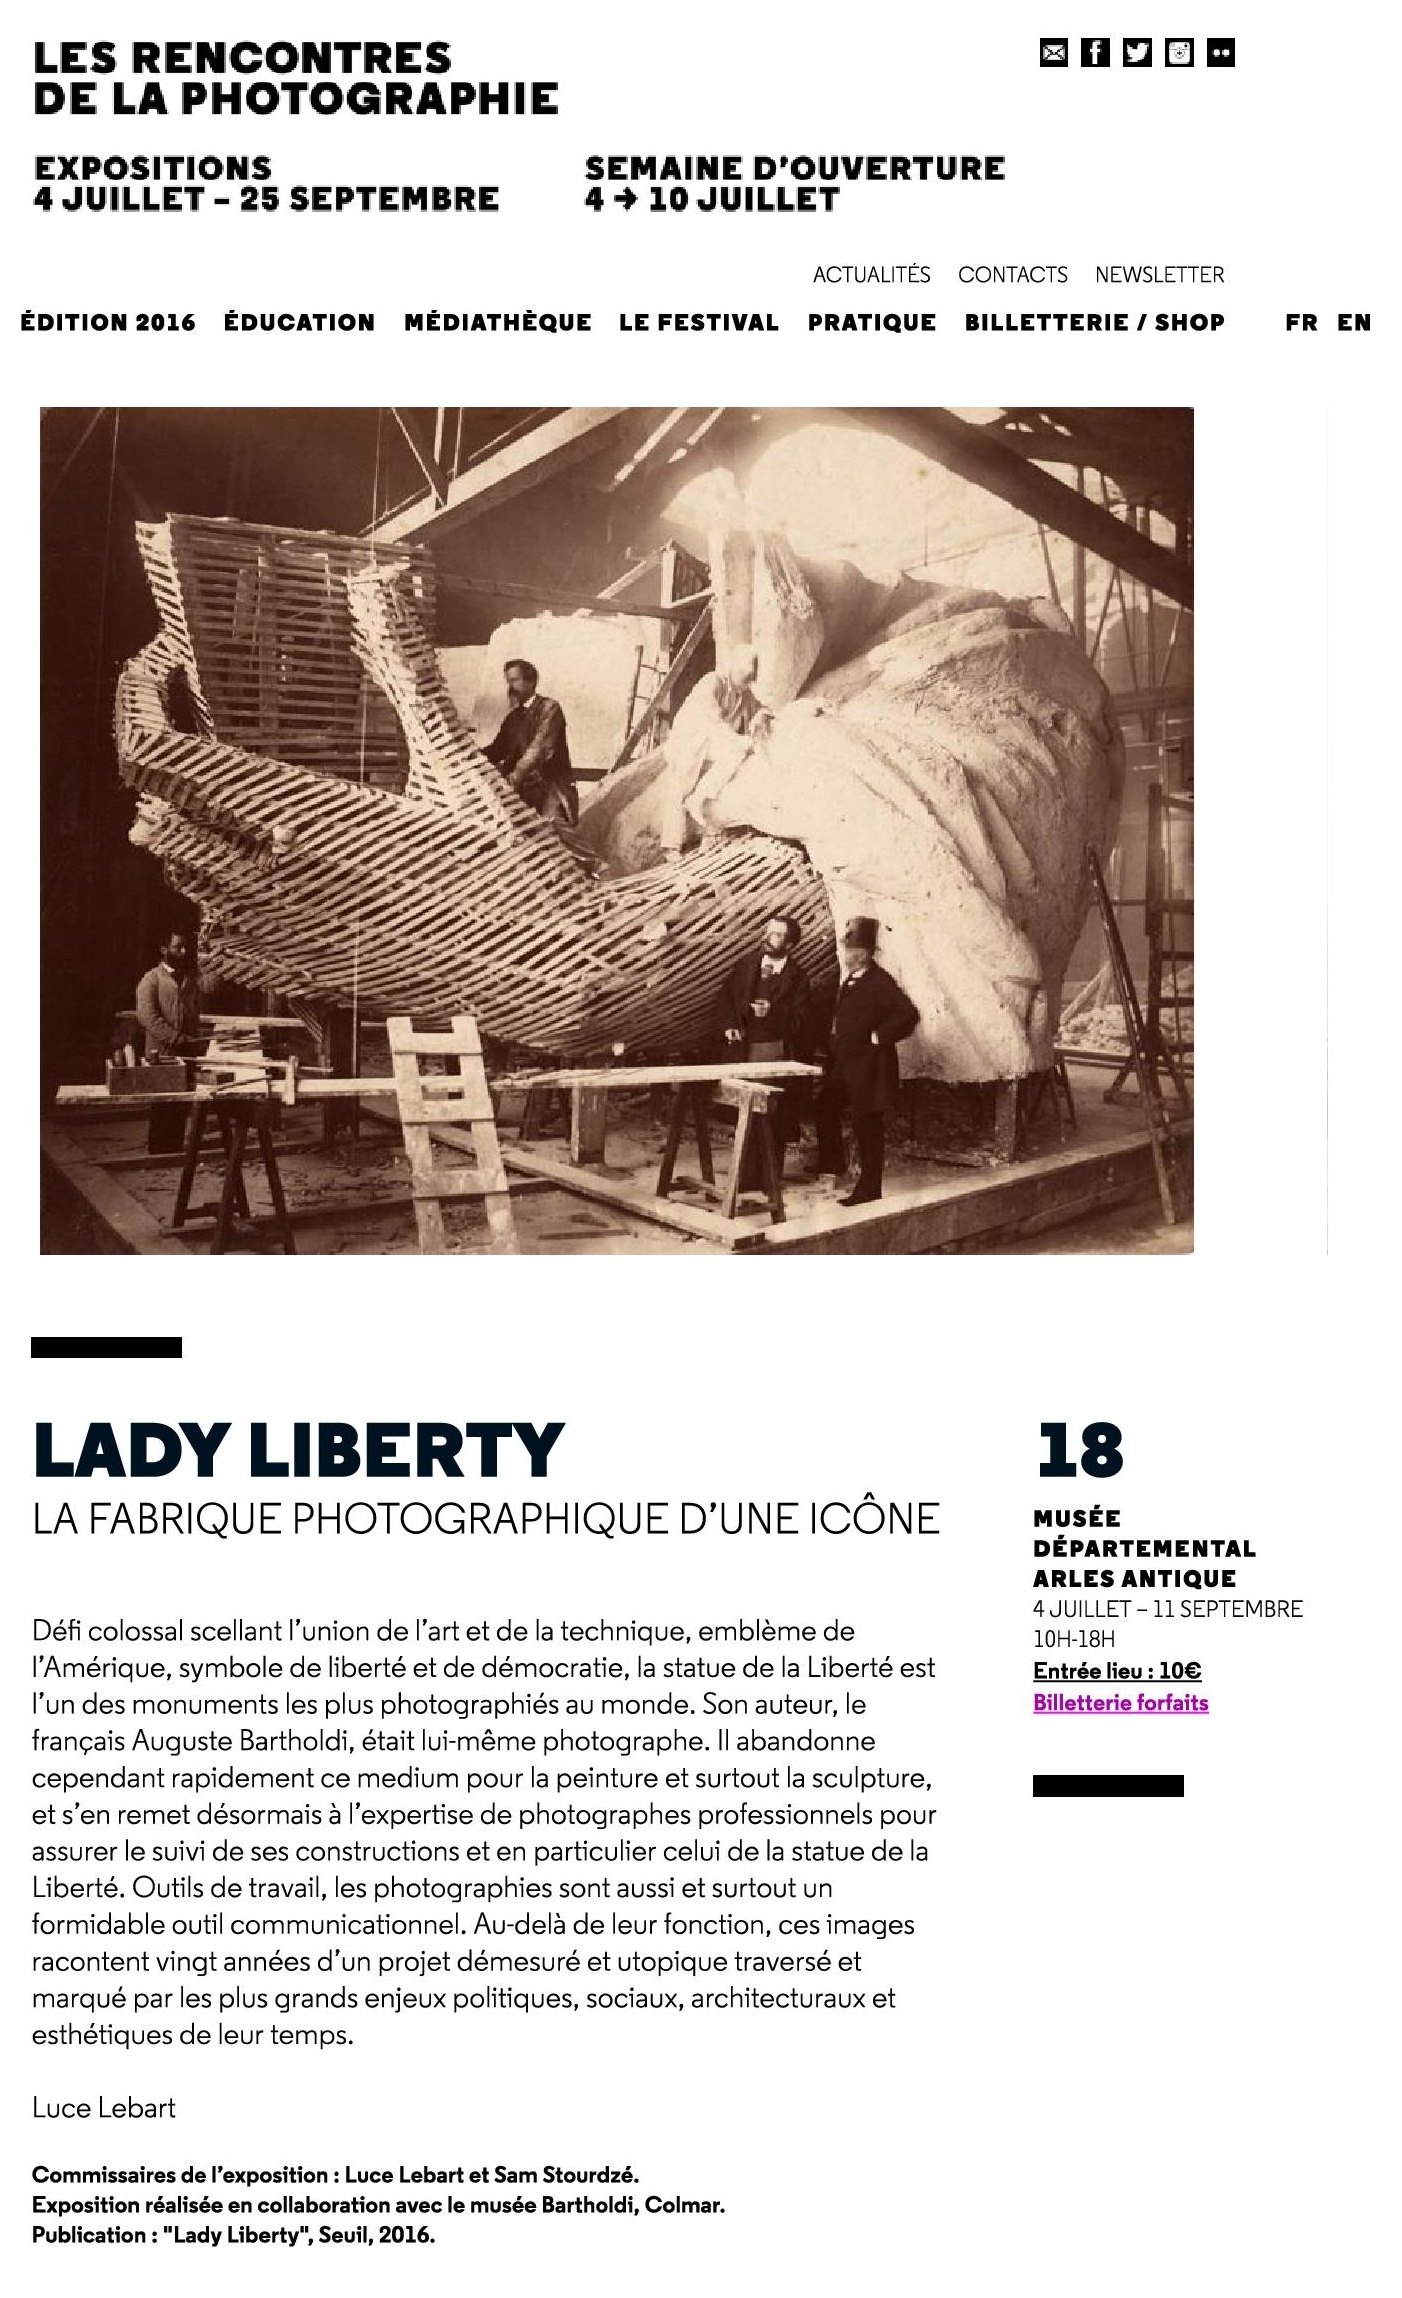 phoca thumb s 2016 ll expo lady liberty arles fr 